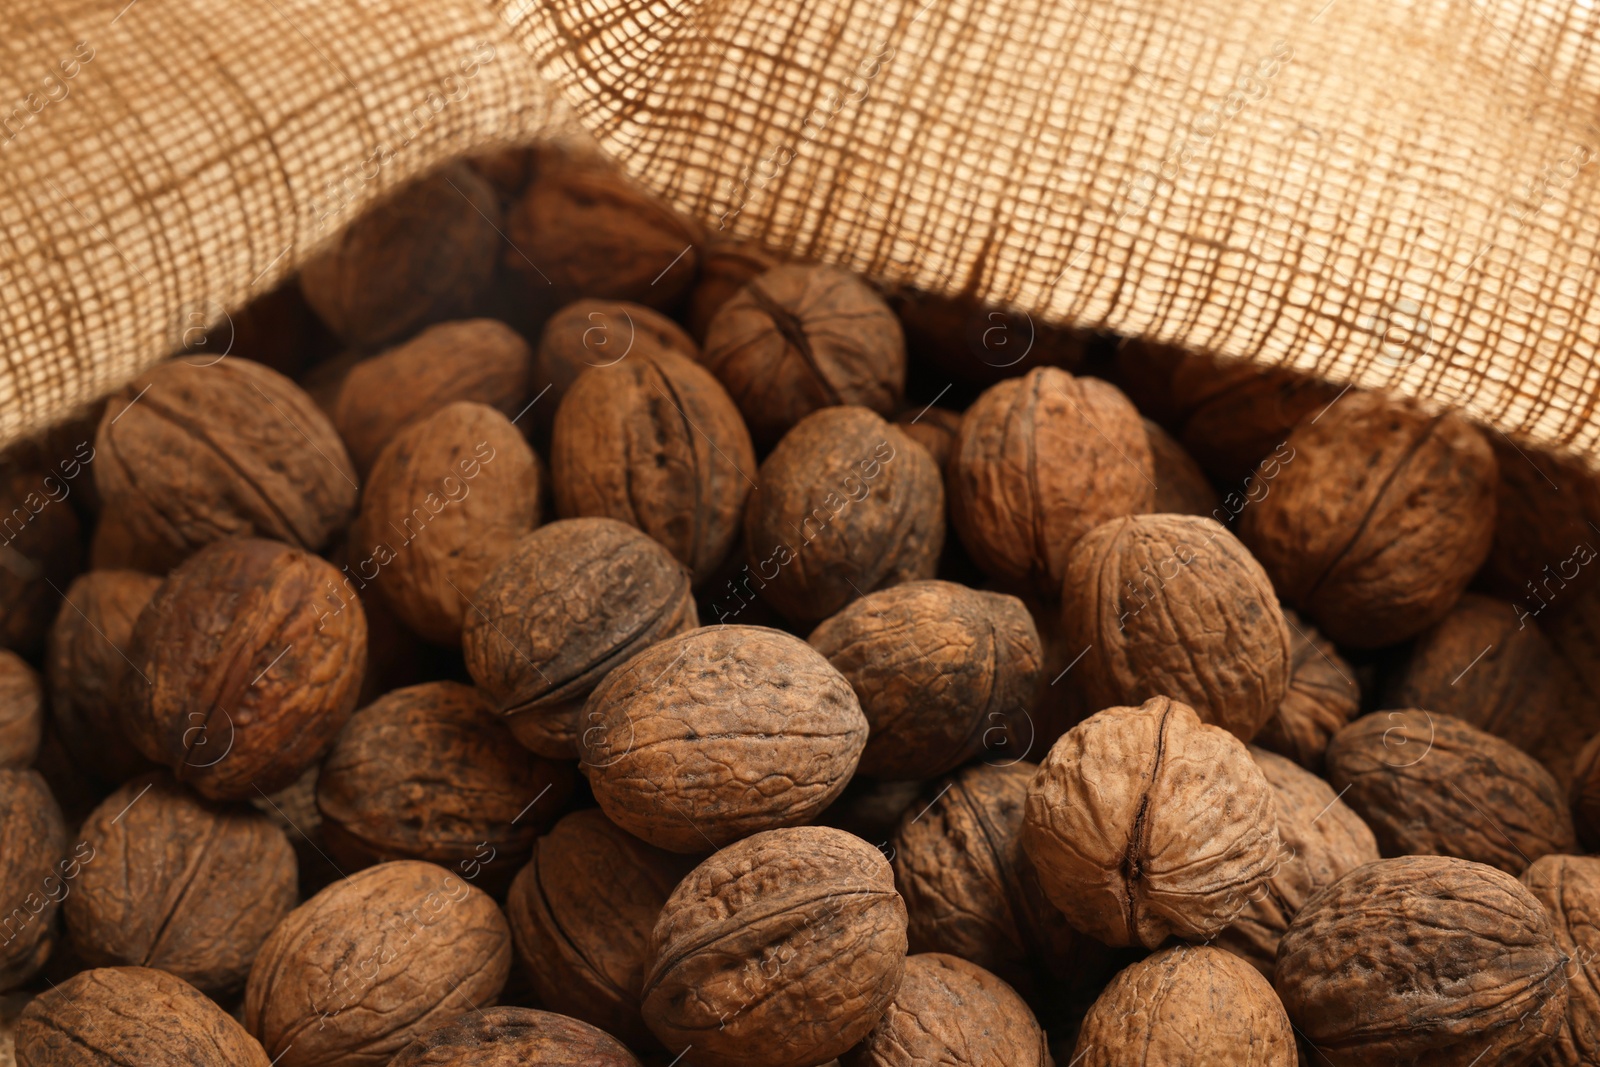 Photo of Many walnuts on burlap fabric, closeup view